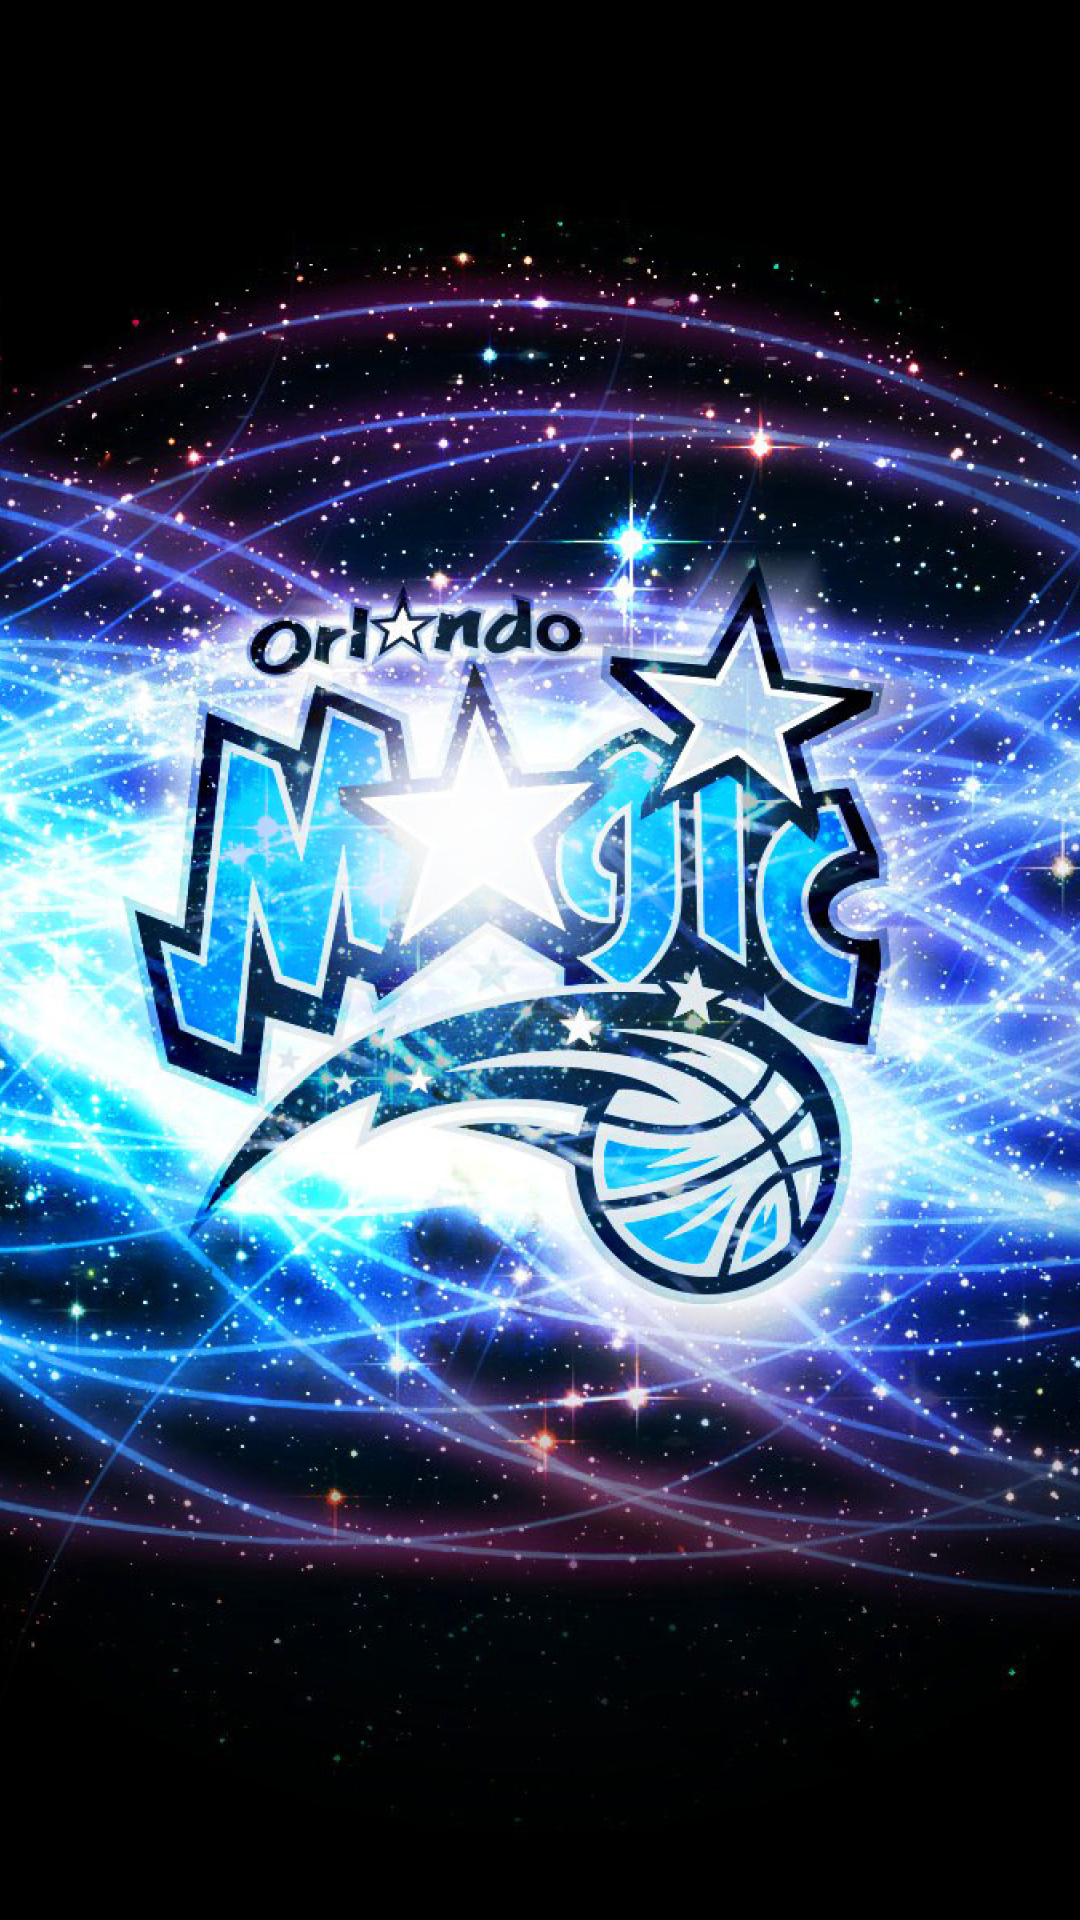 Orlando Magic, Southeast Division wallpaper 1080x1920